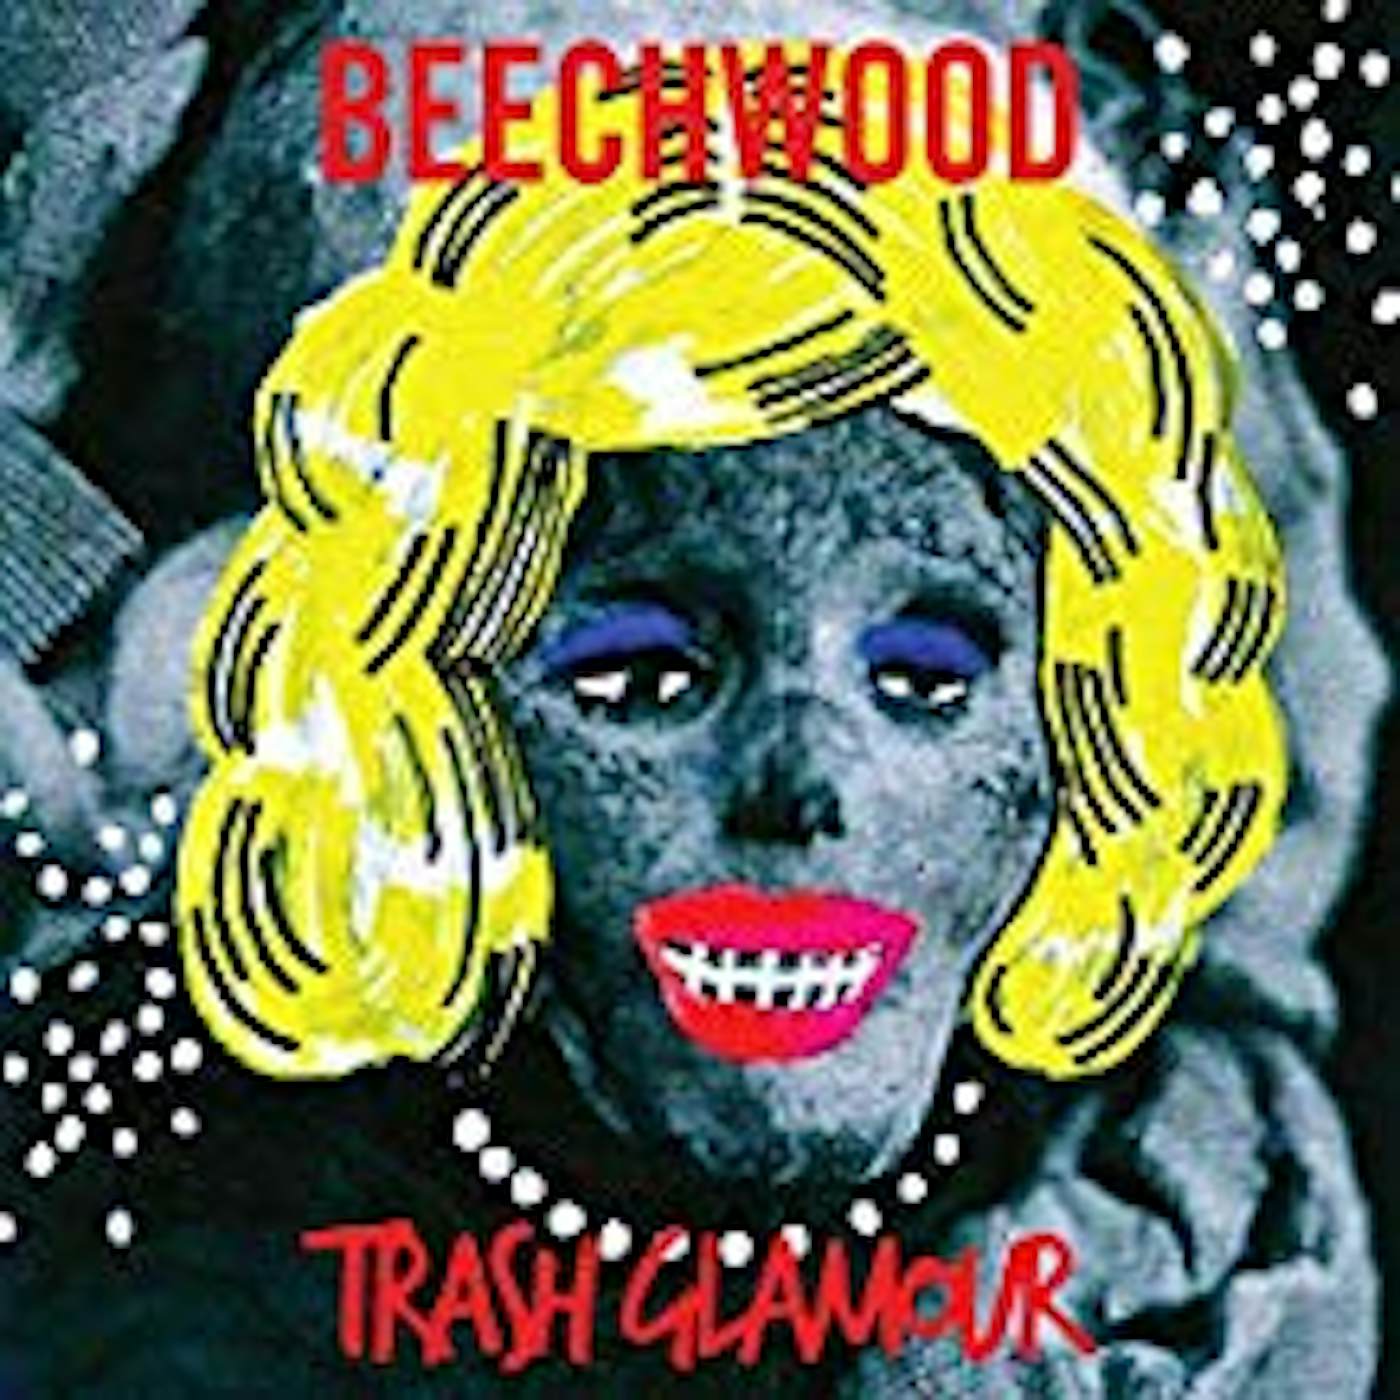 Beechwood TRASH GLAMOUR CD